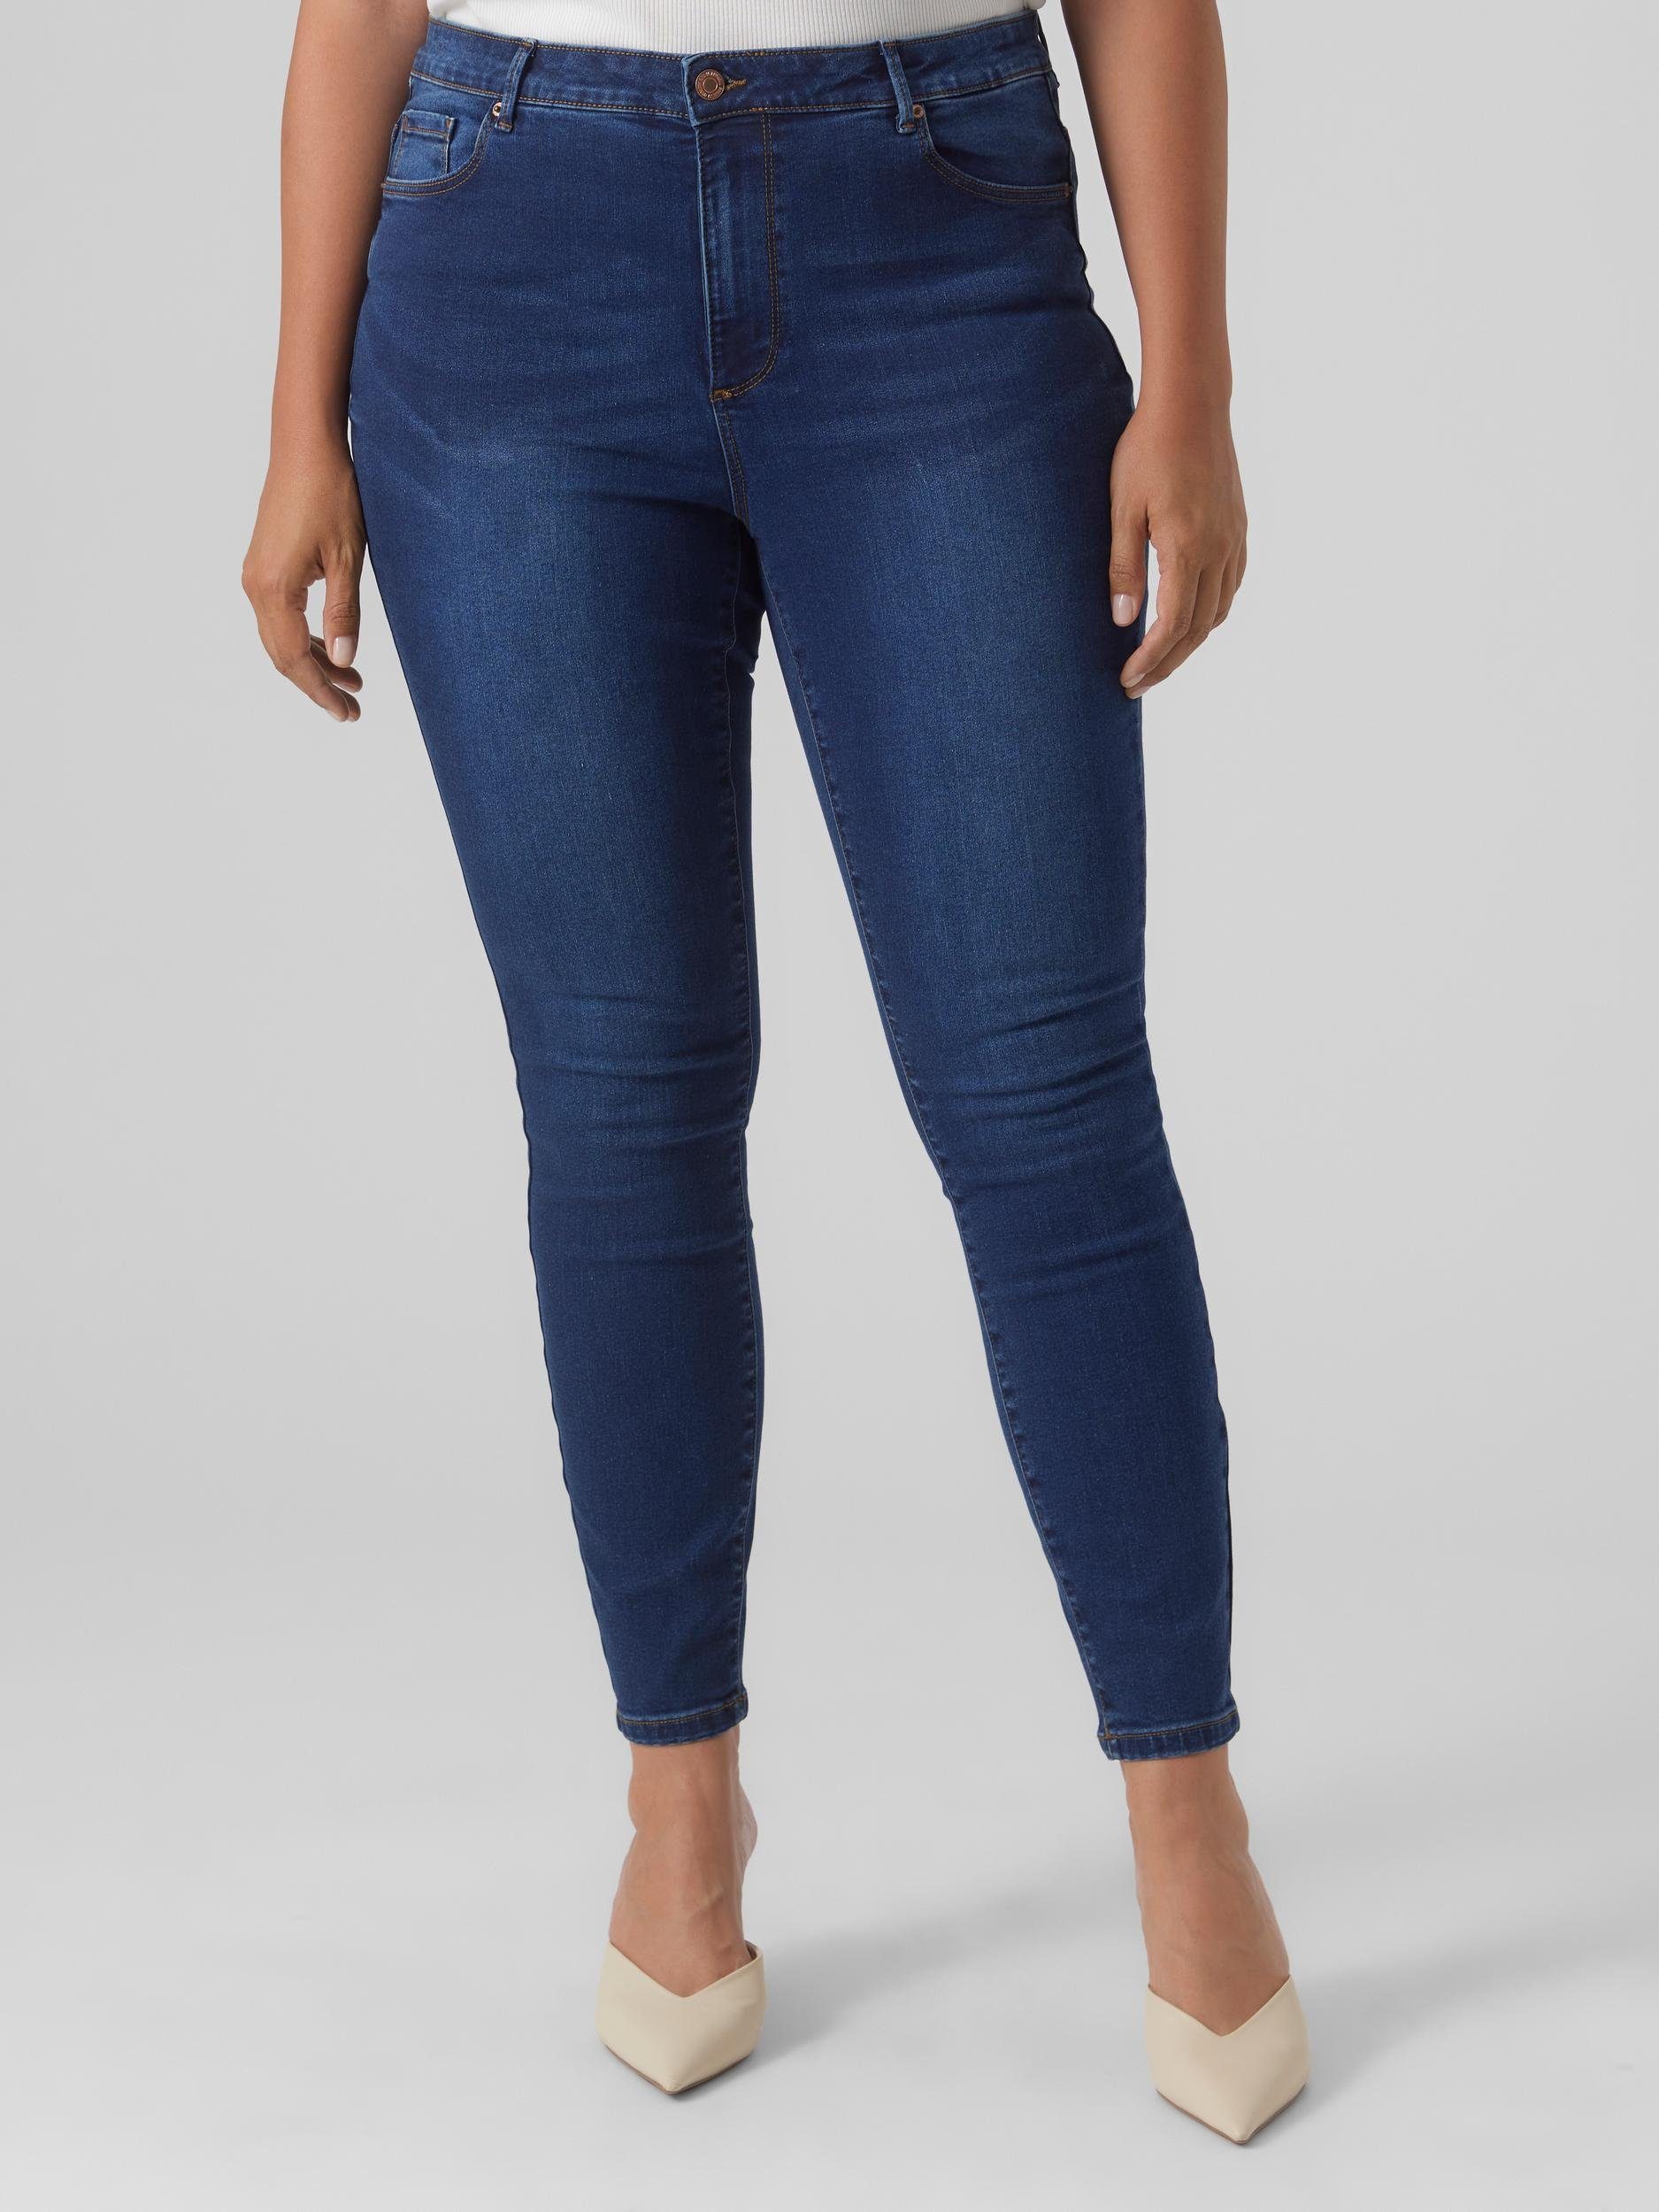 | Skinny nu bestellen OTTO CUR SKINNY Curve VI3128 Moda online VMCPHIA jeans J NOOS fit Vero HR SOFT